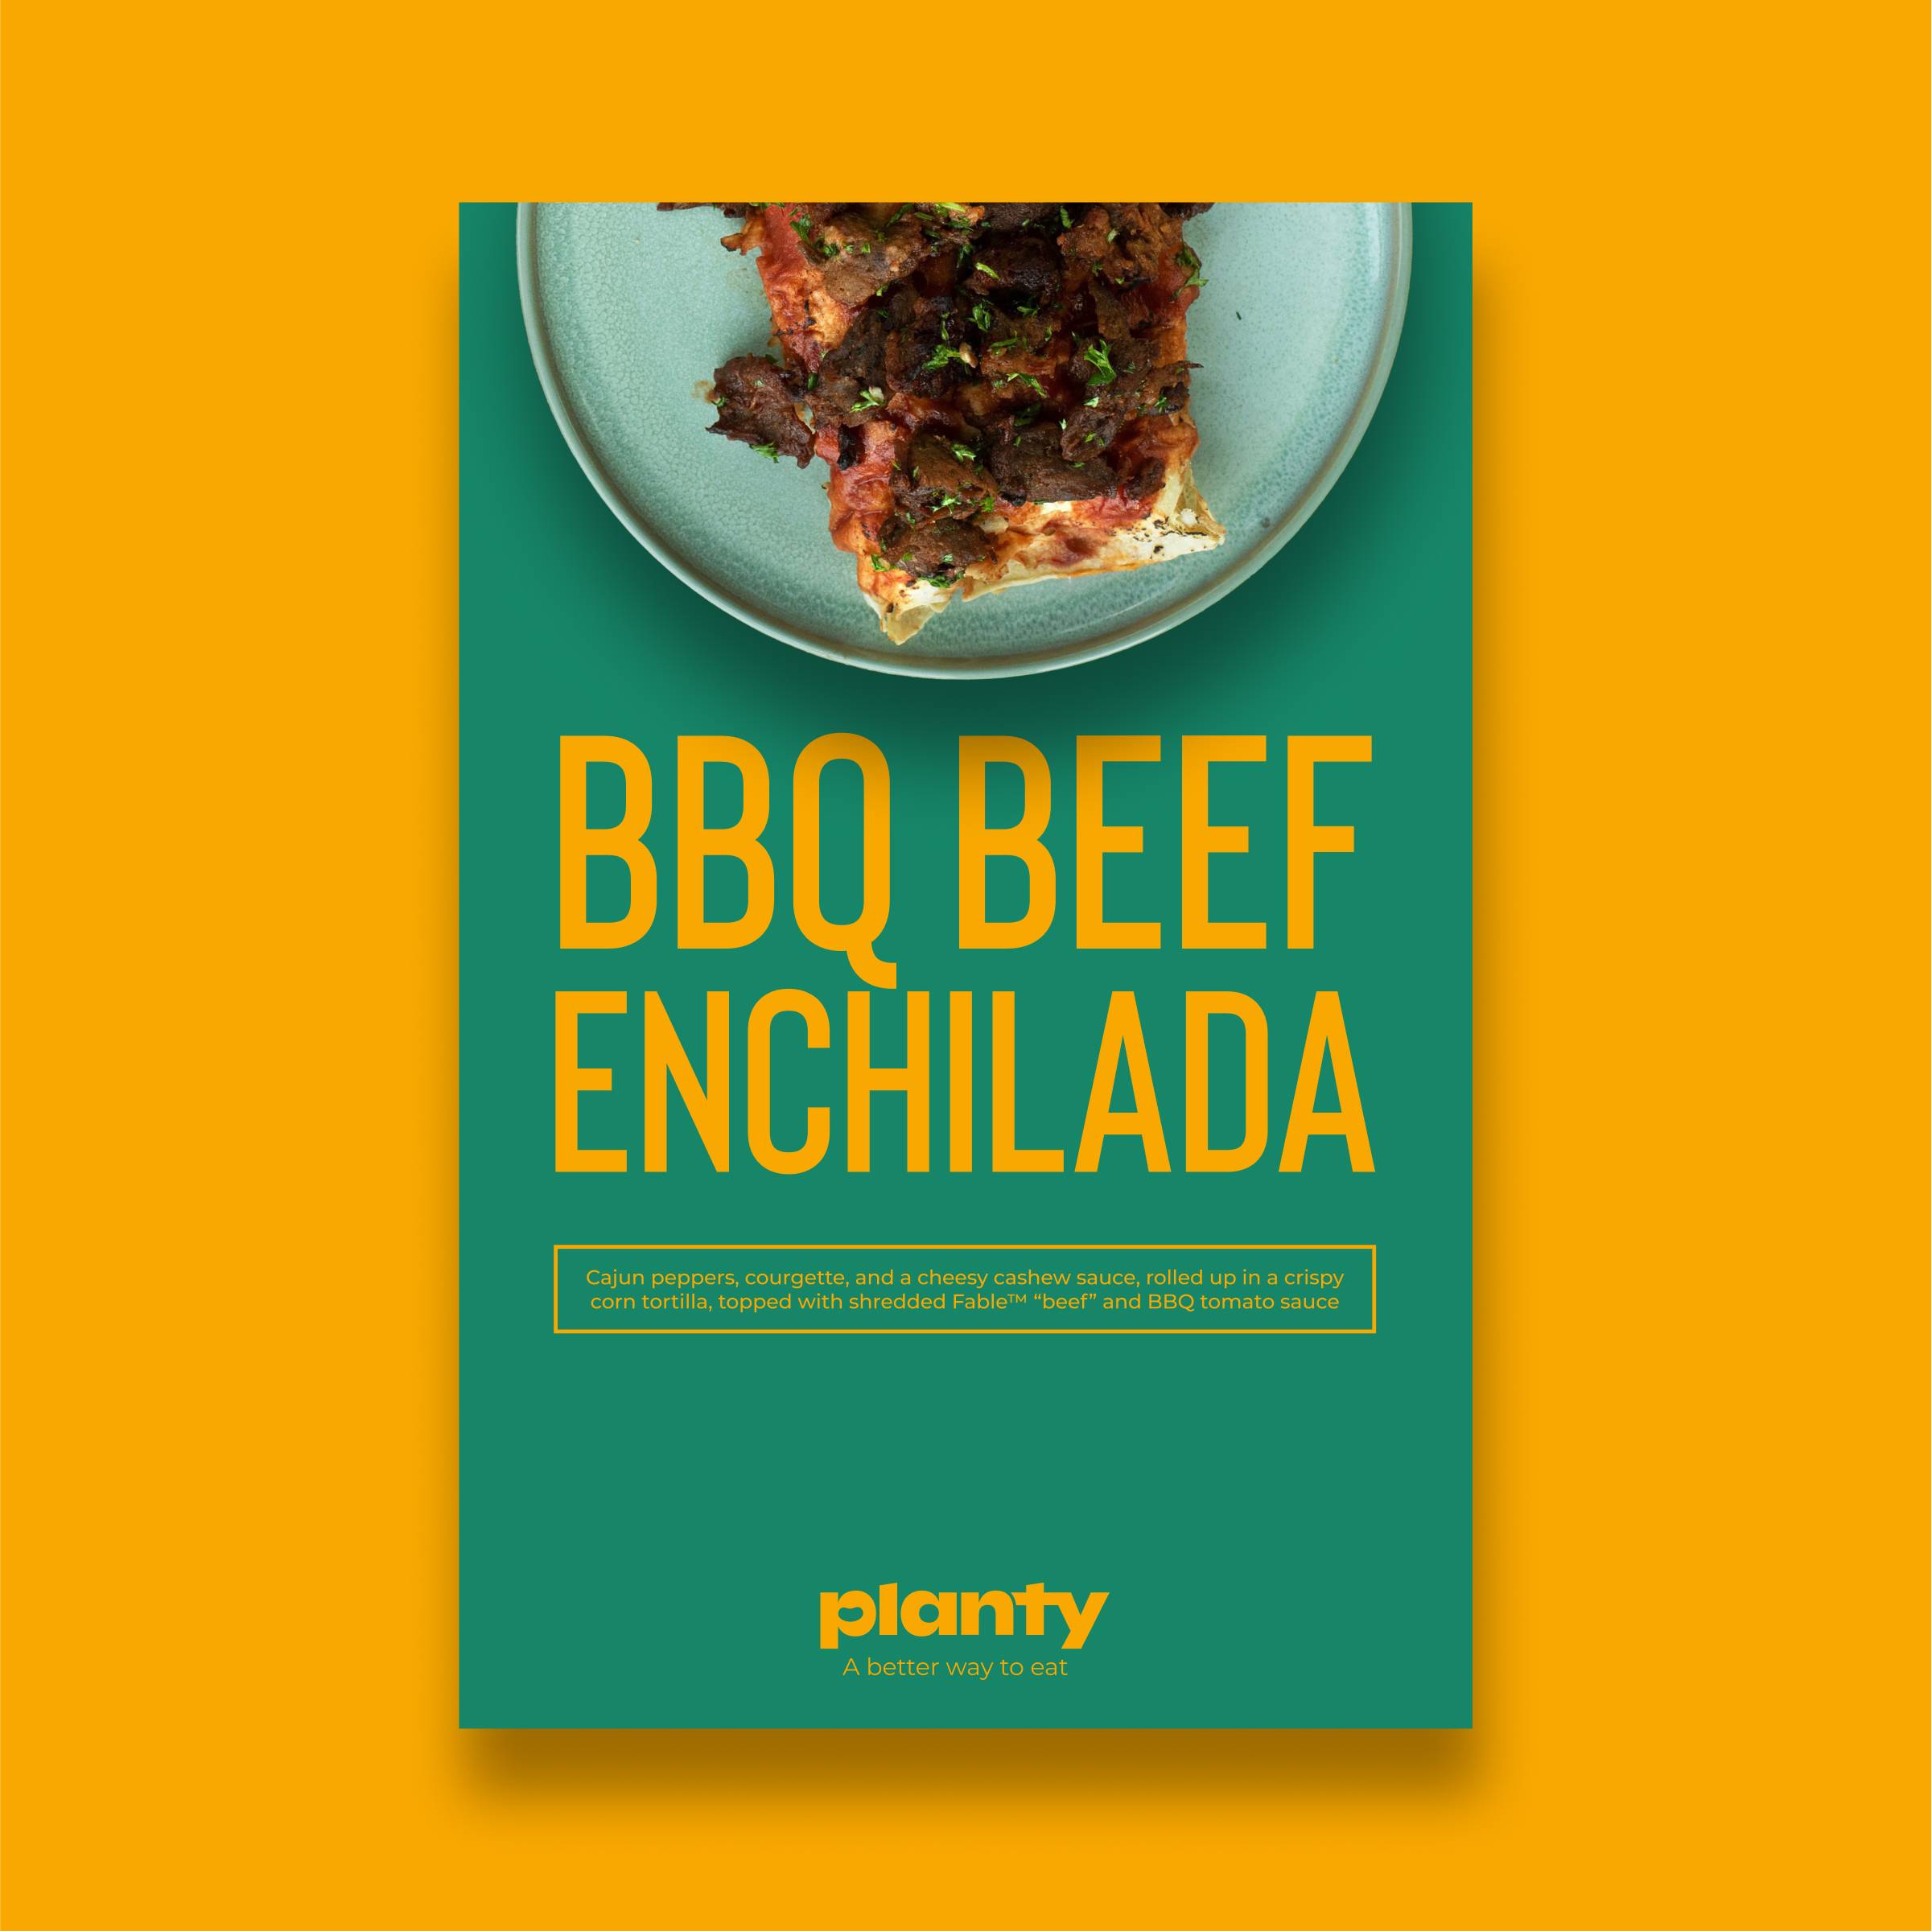 BBQ Beef Enchilada image 2